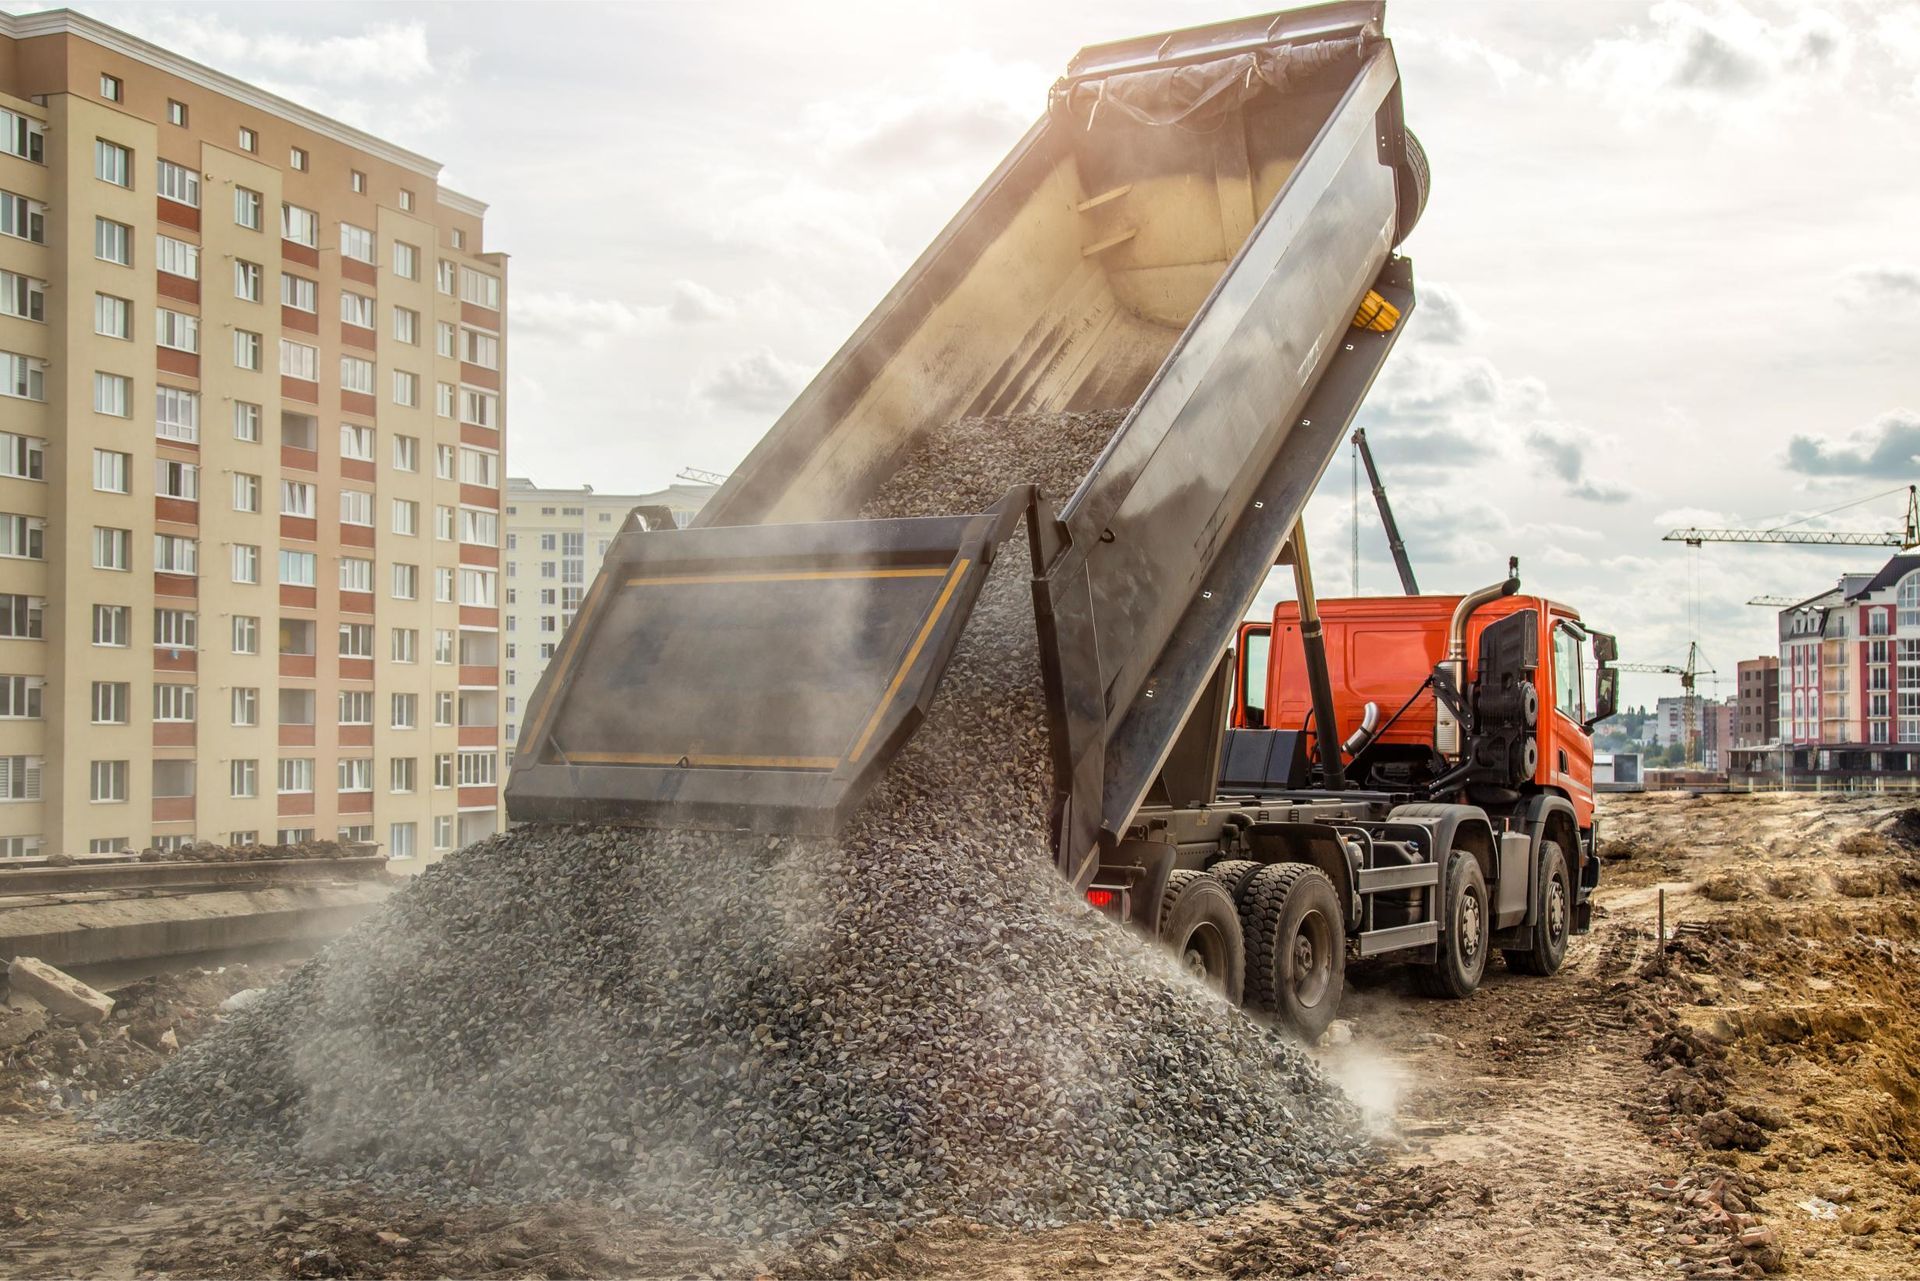 A dump truck is dumping gravel on a construction site.